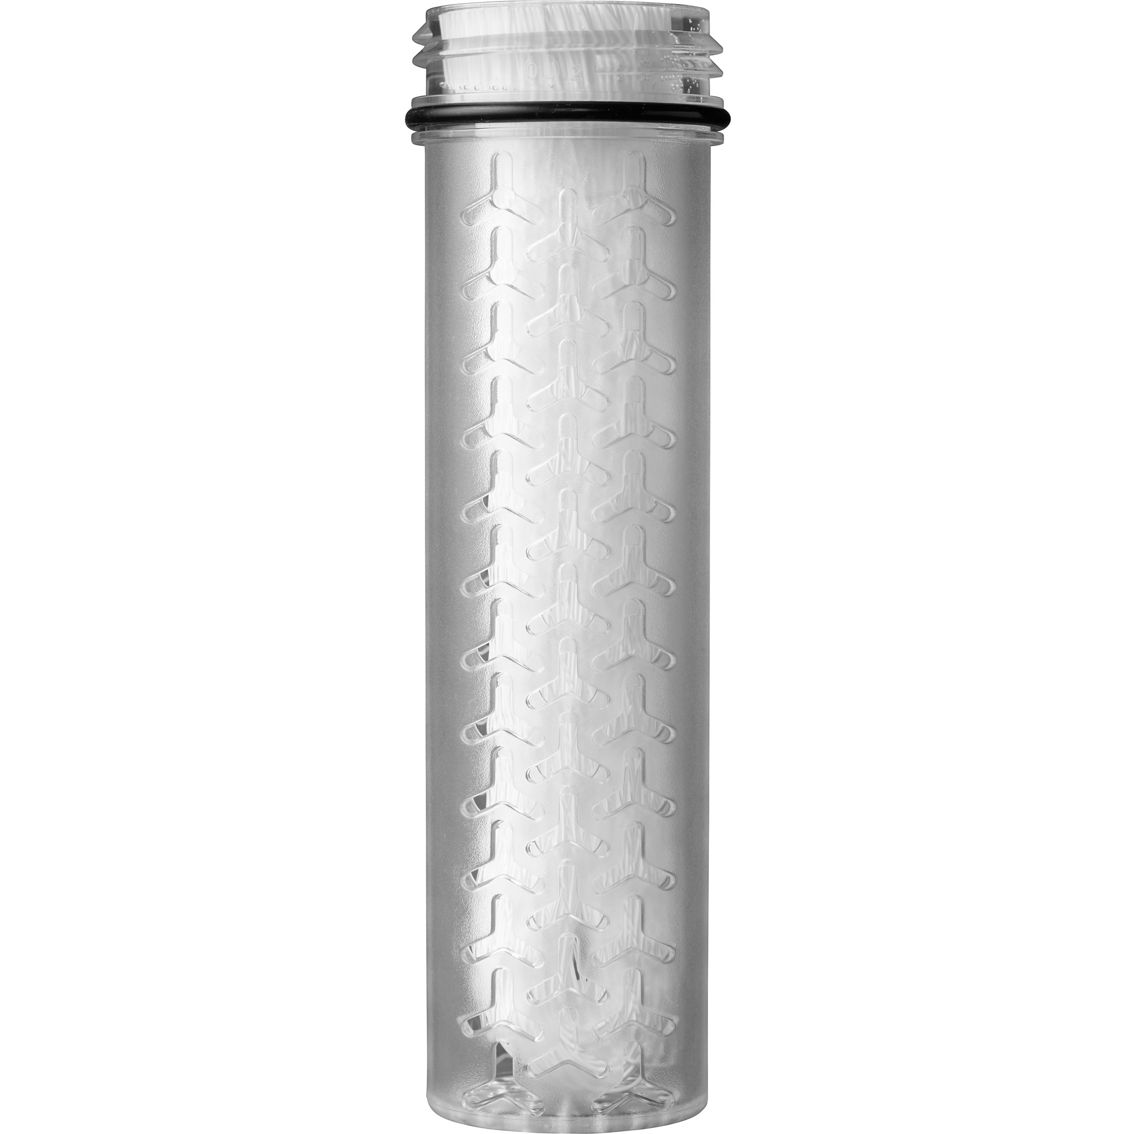 Camelbak LifeStraw Bottle Filter Set, Large - Image 2 of 2